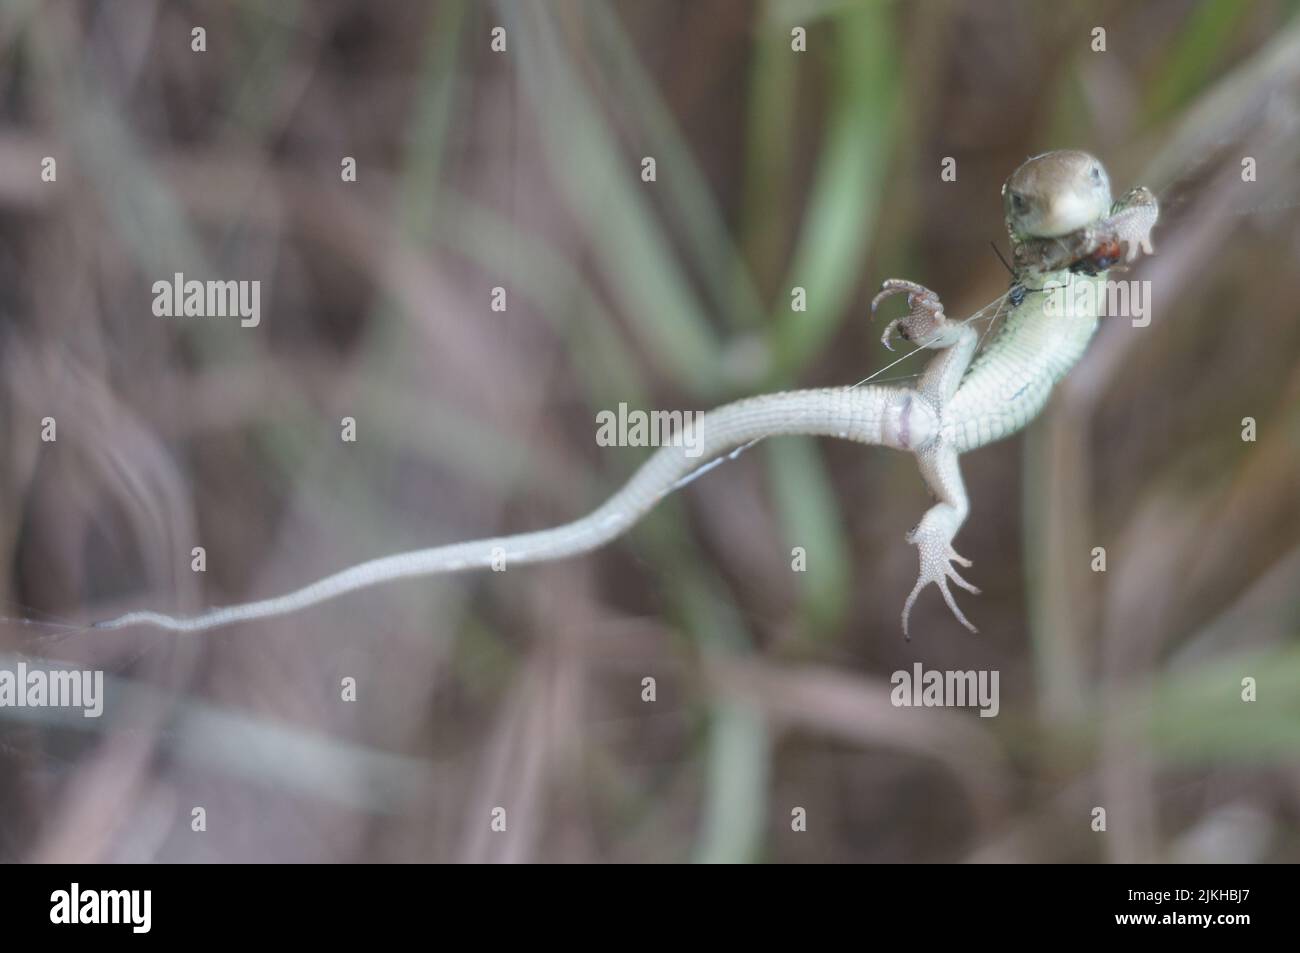 A white gecko lizard on the glass Stock Photo